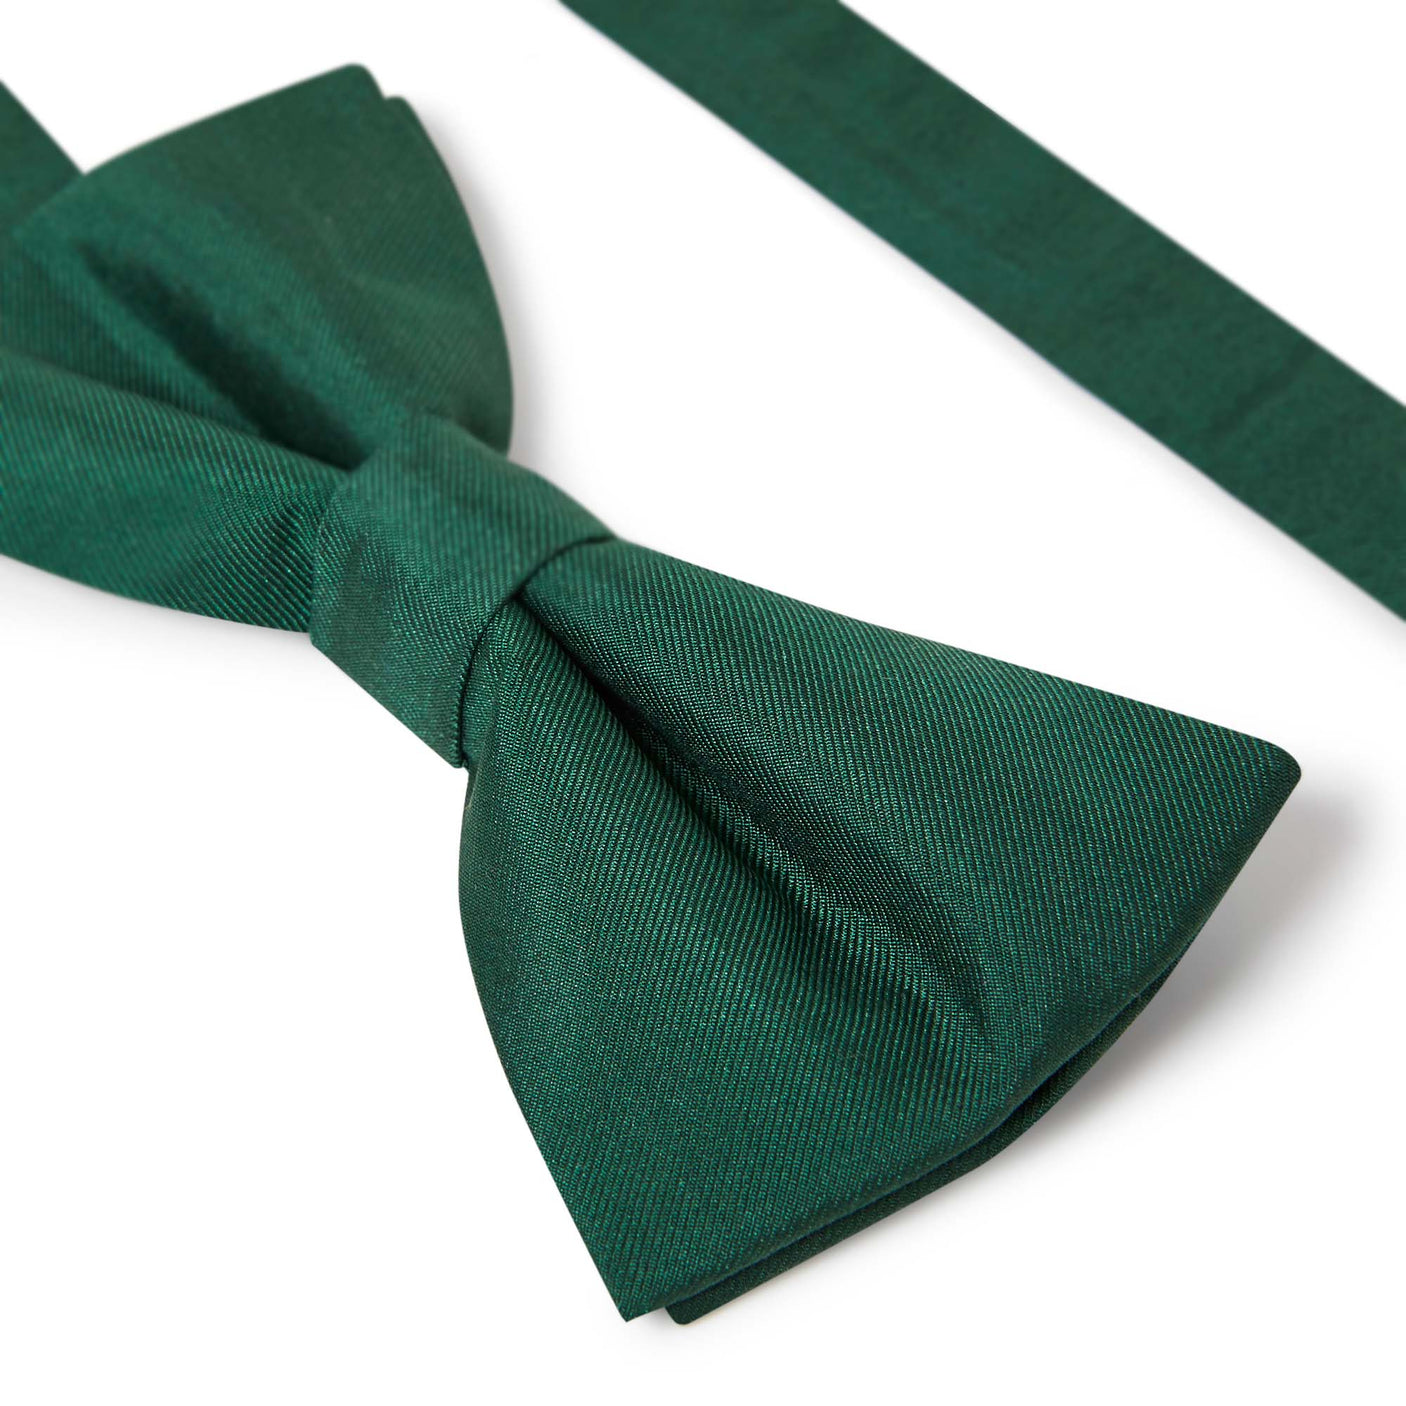 Green twill bow tie